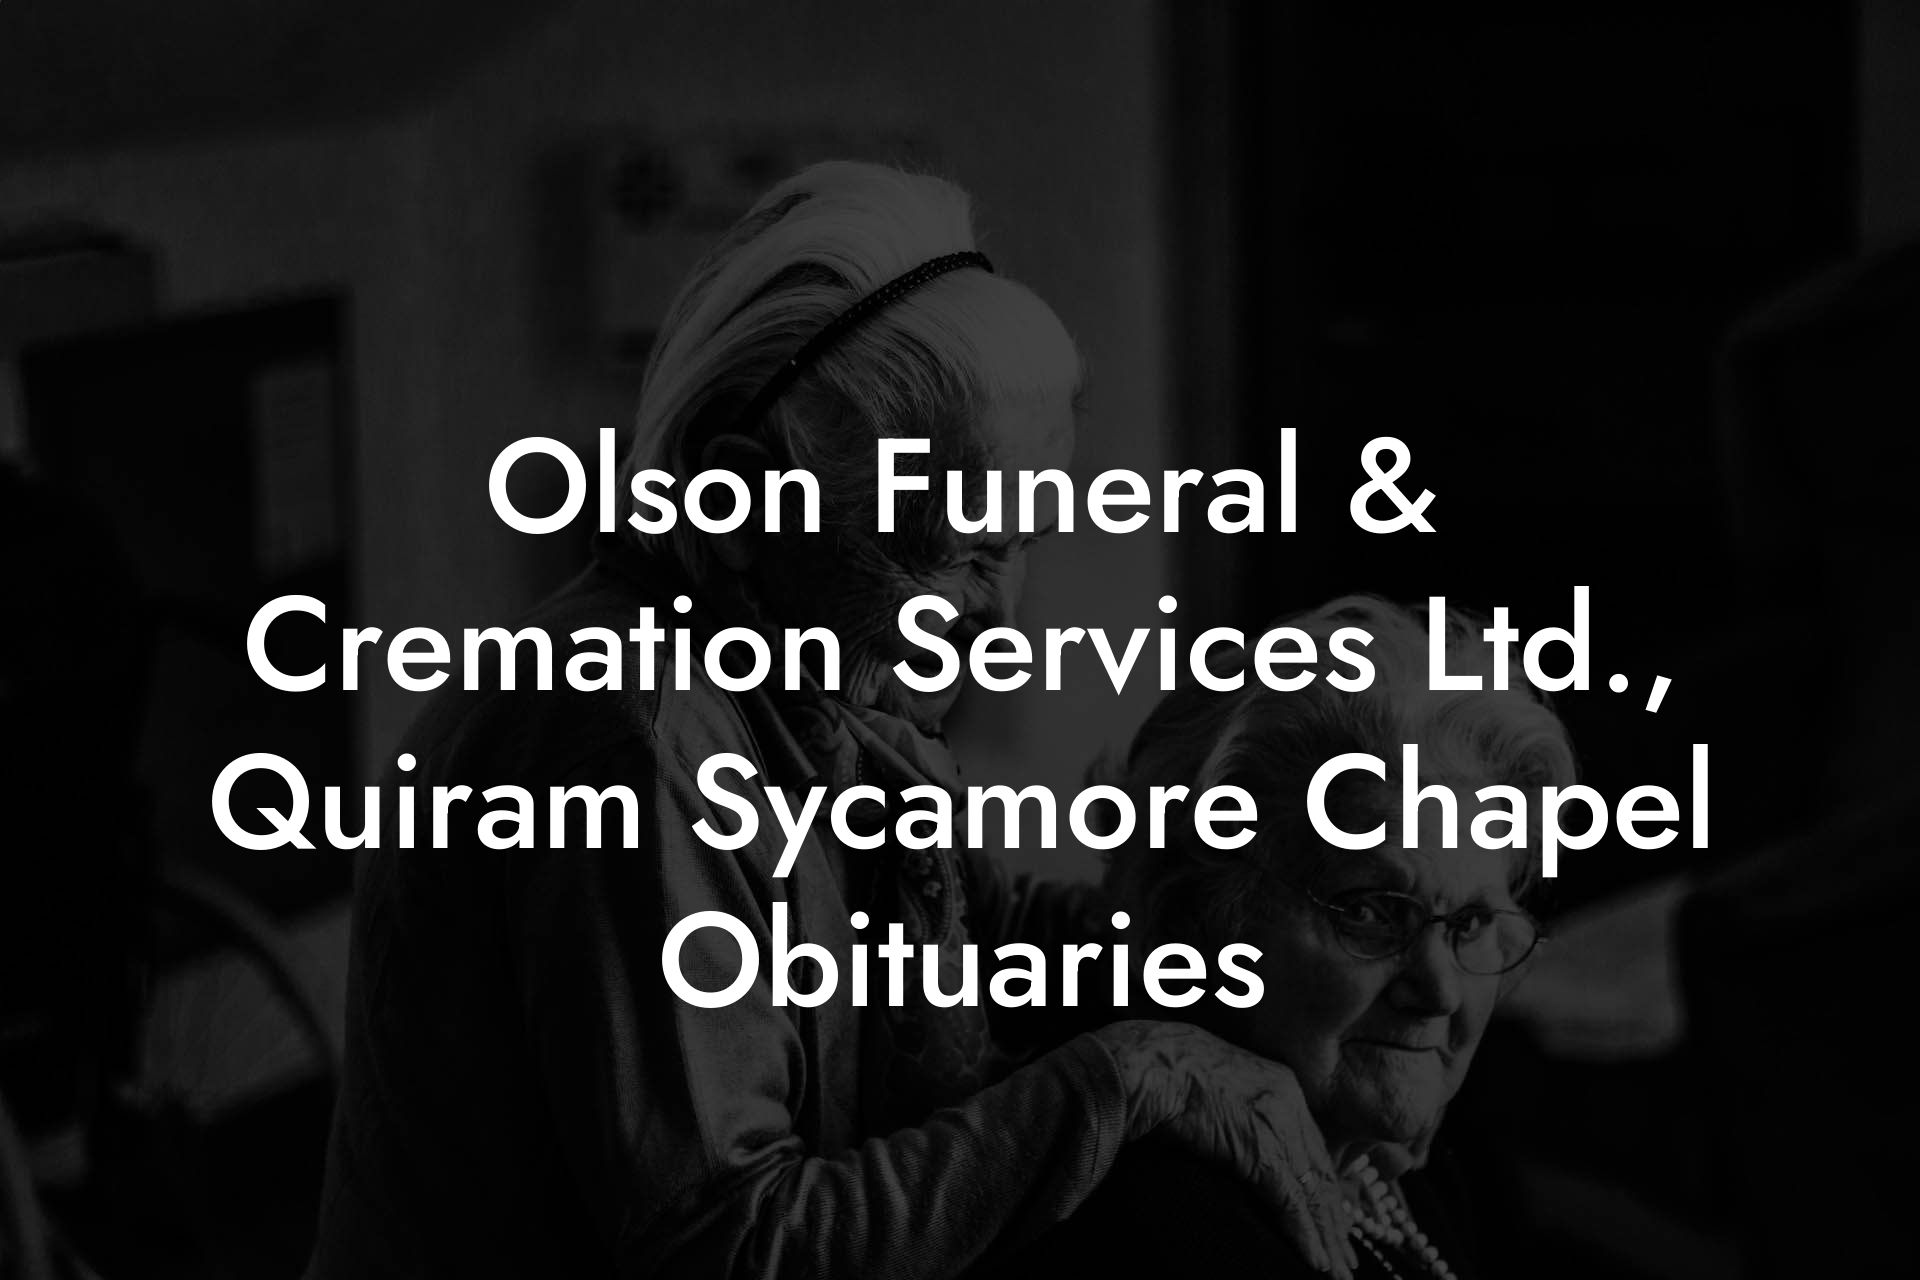 Olson Funeral & Cremation Services Ltd., Quiram Sycamore Chapel Obituaries